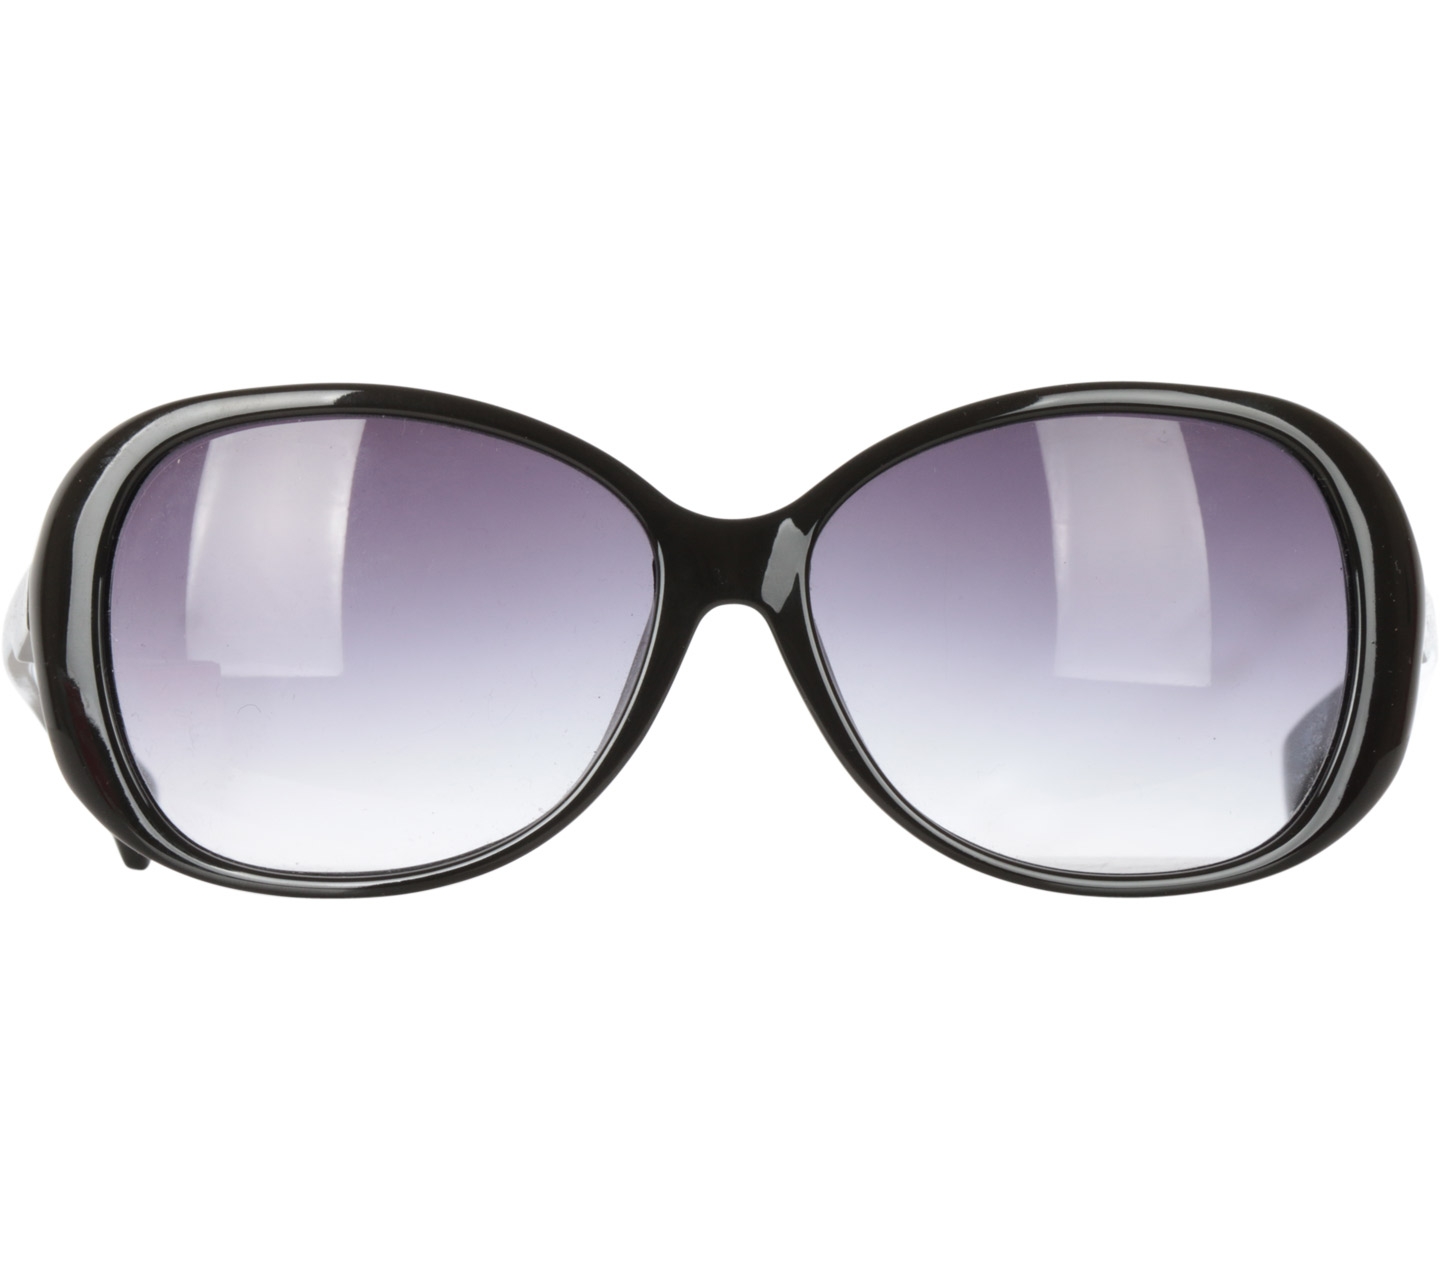 Calvin Klein Black Sunglasses